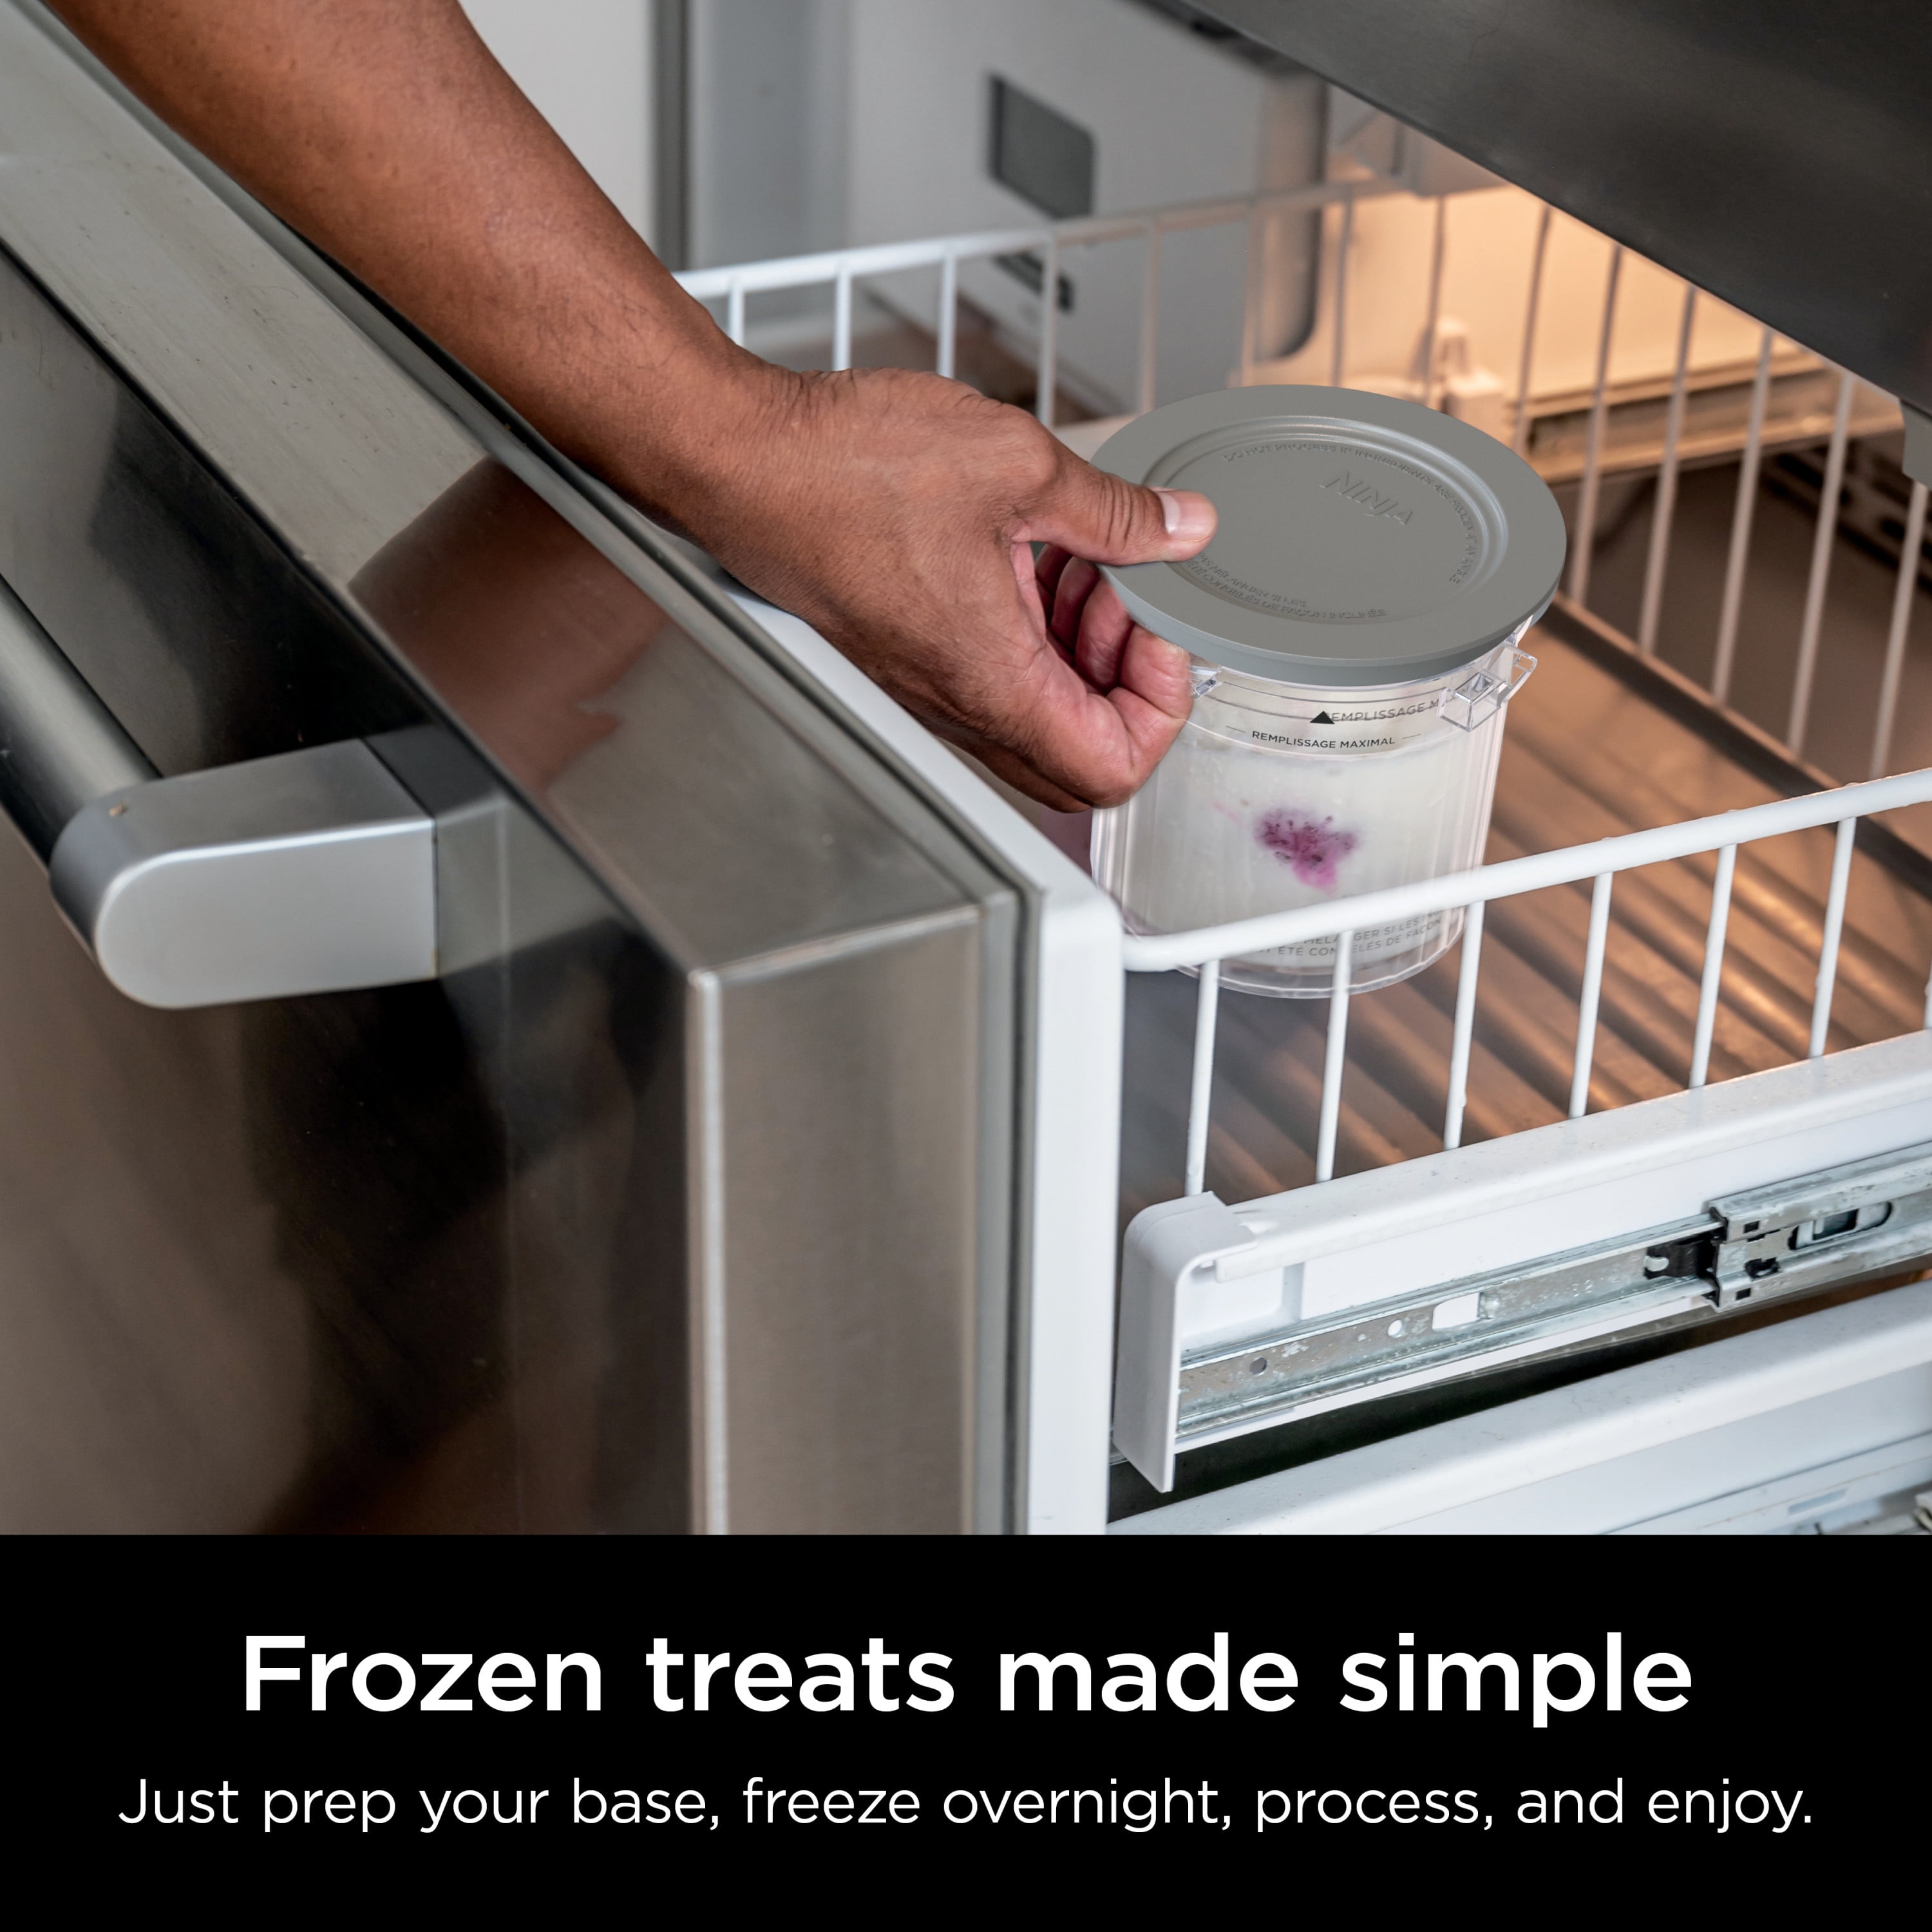 Ninja® CREAMi Breeze Ice Cream Maker and Frozen Treat Maker with 5